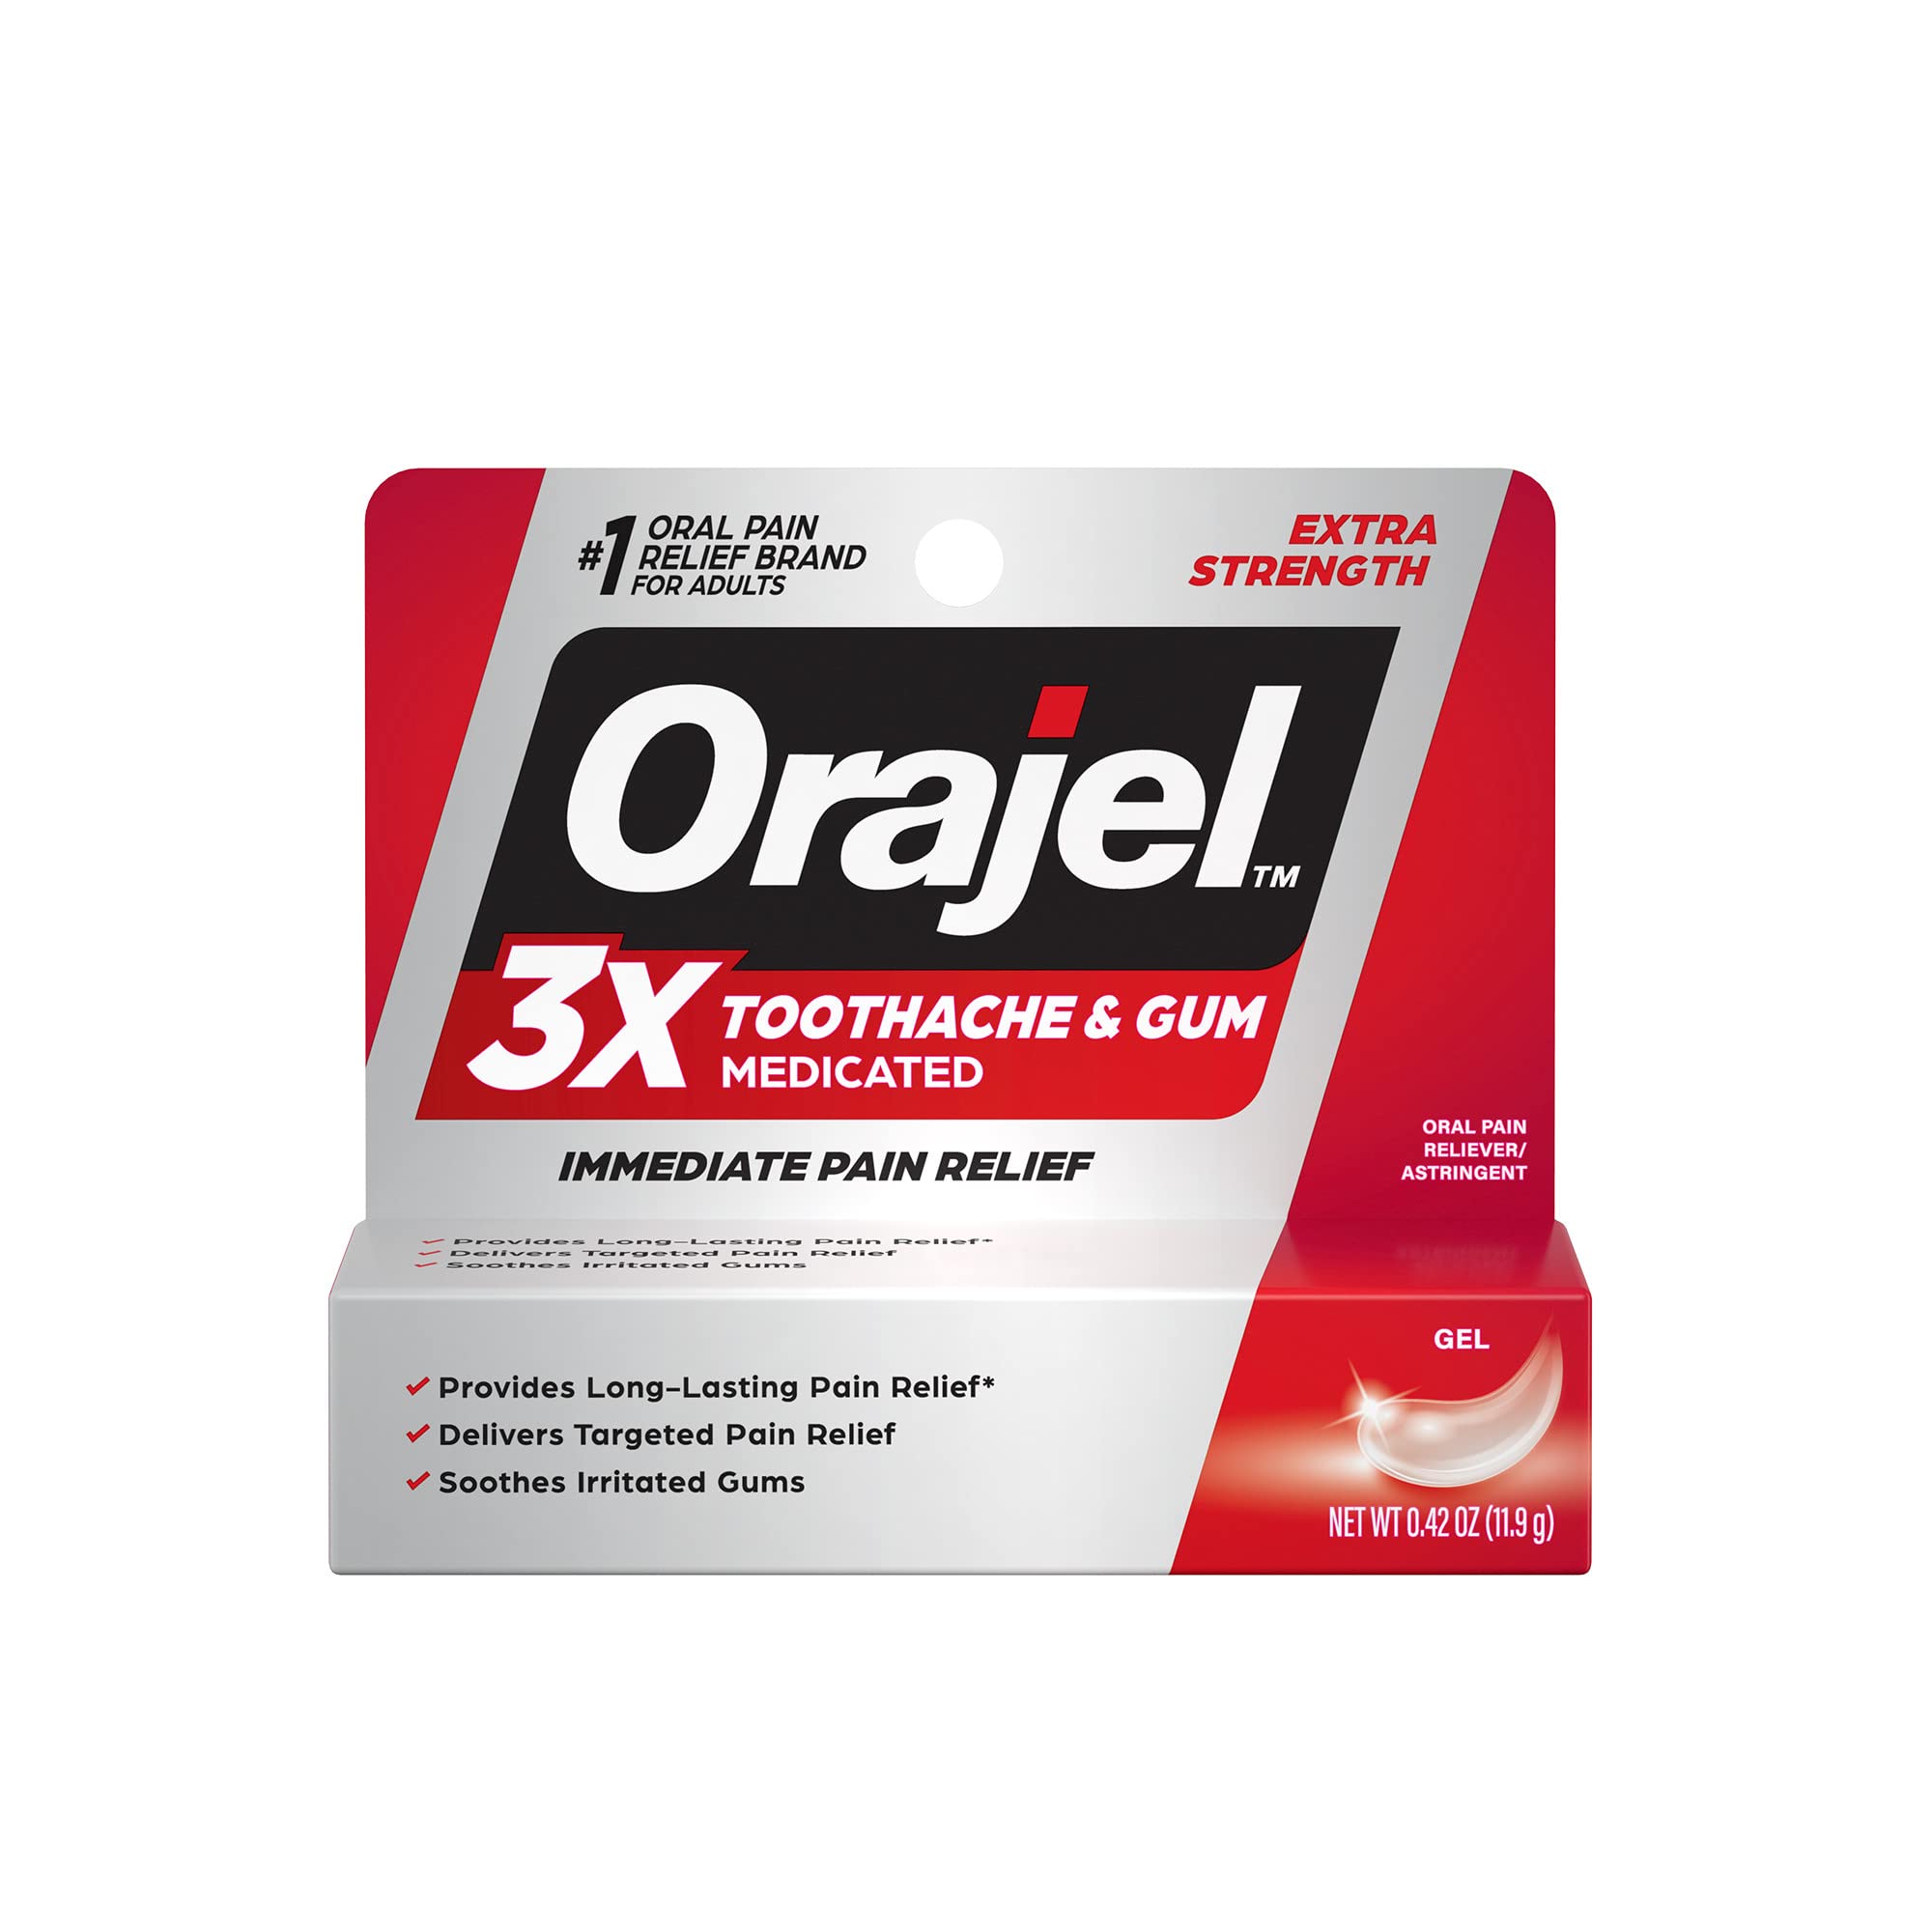 Orajel 3X for Toothache & Gum Pain